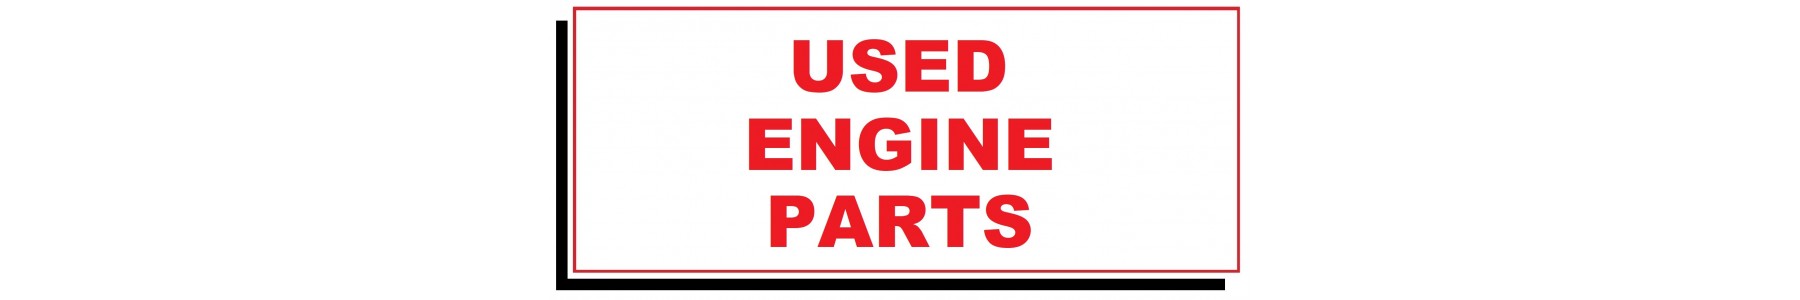 USED ENGINE PARTS